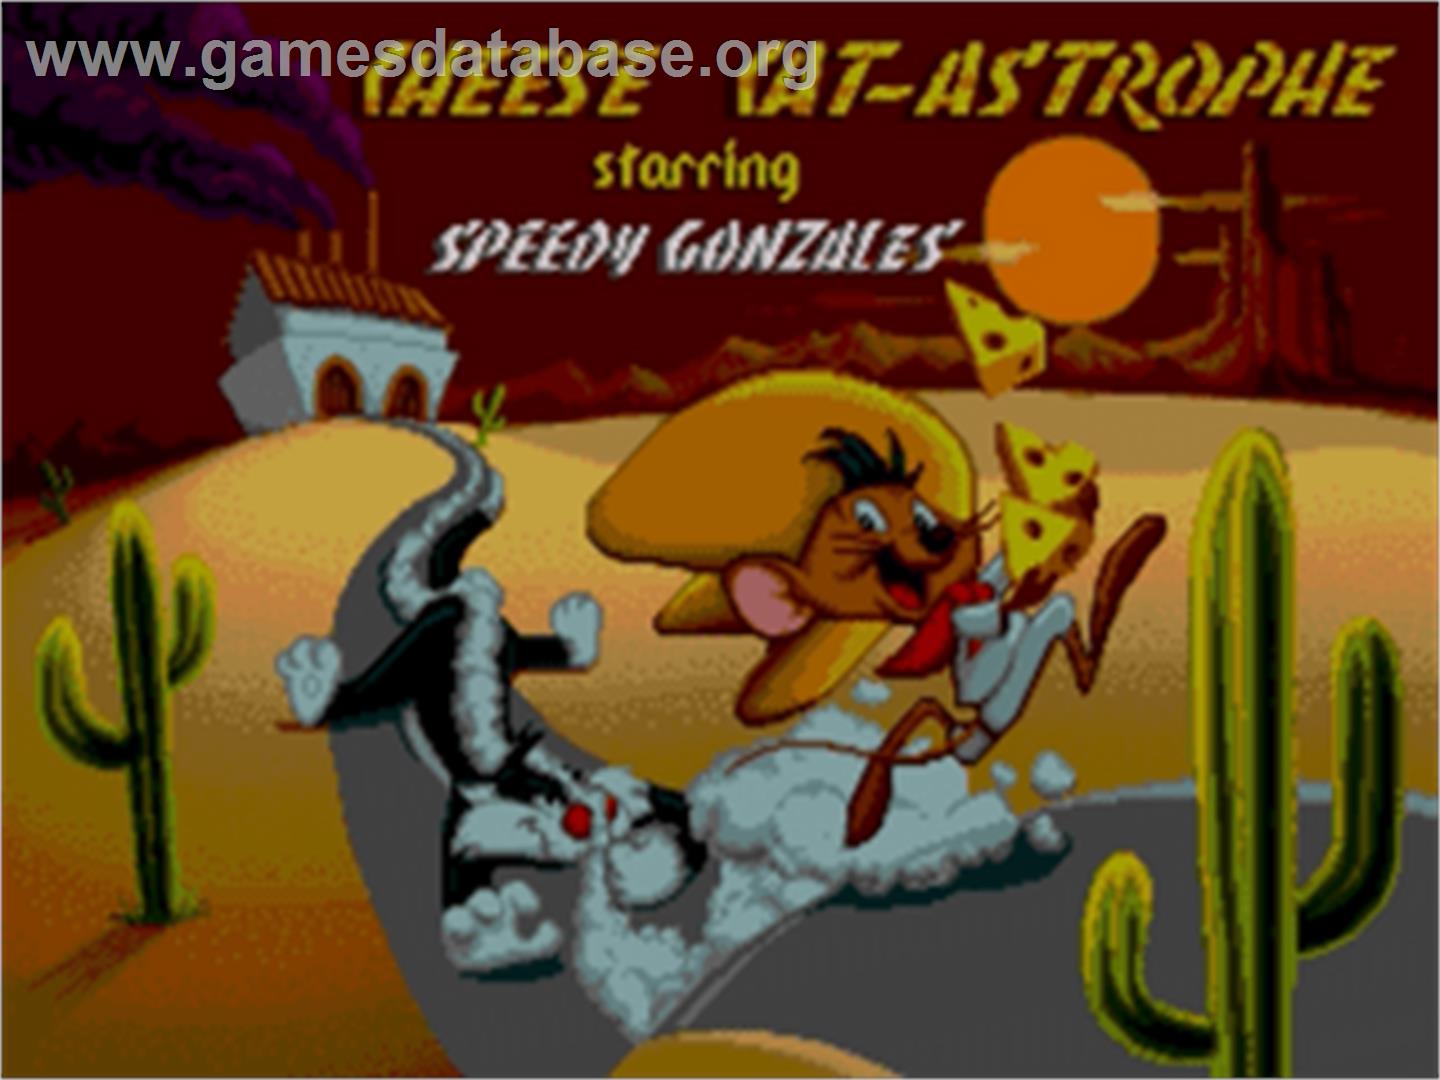 Cheese Cat-Astrophe starring Speedy Gonzales - Sega Nomad - Artwork - Title Screen